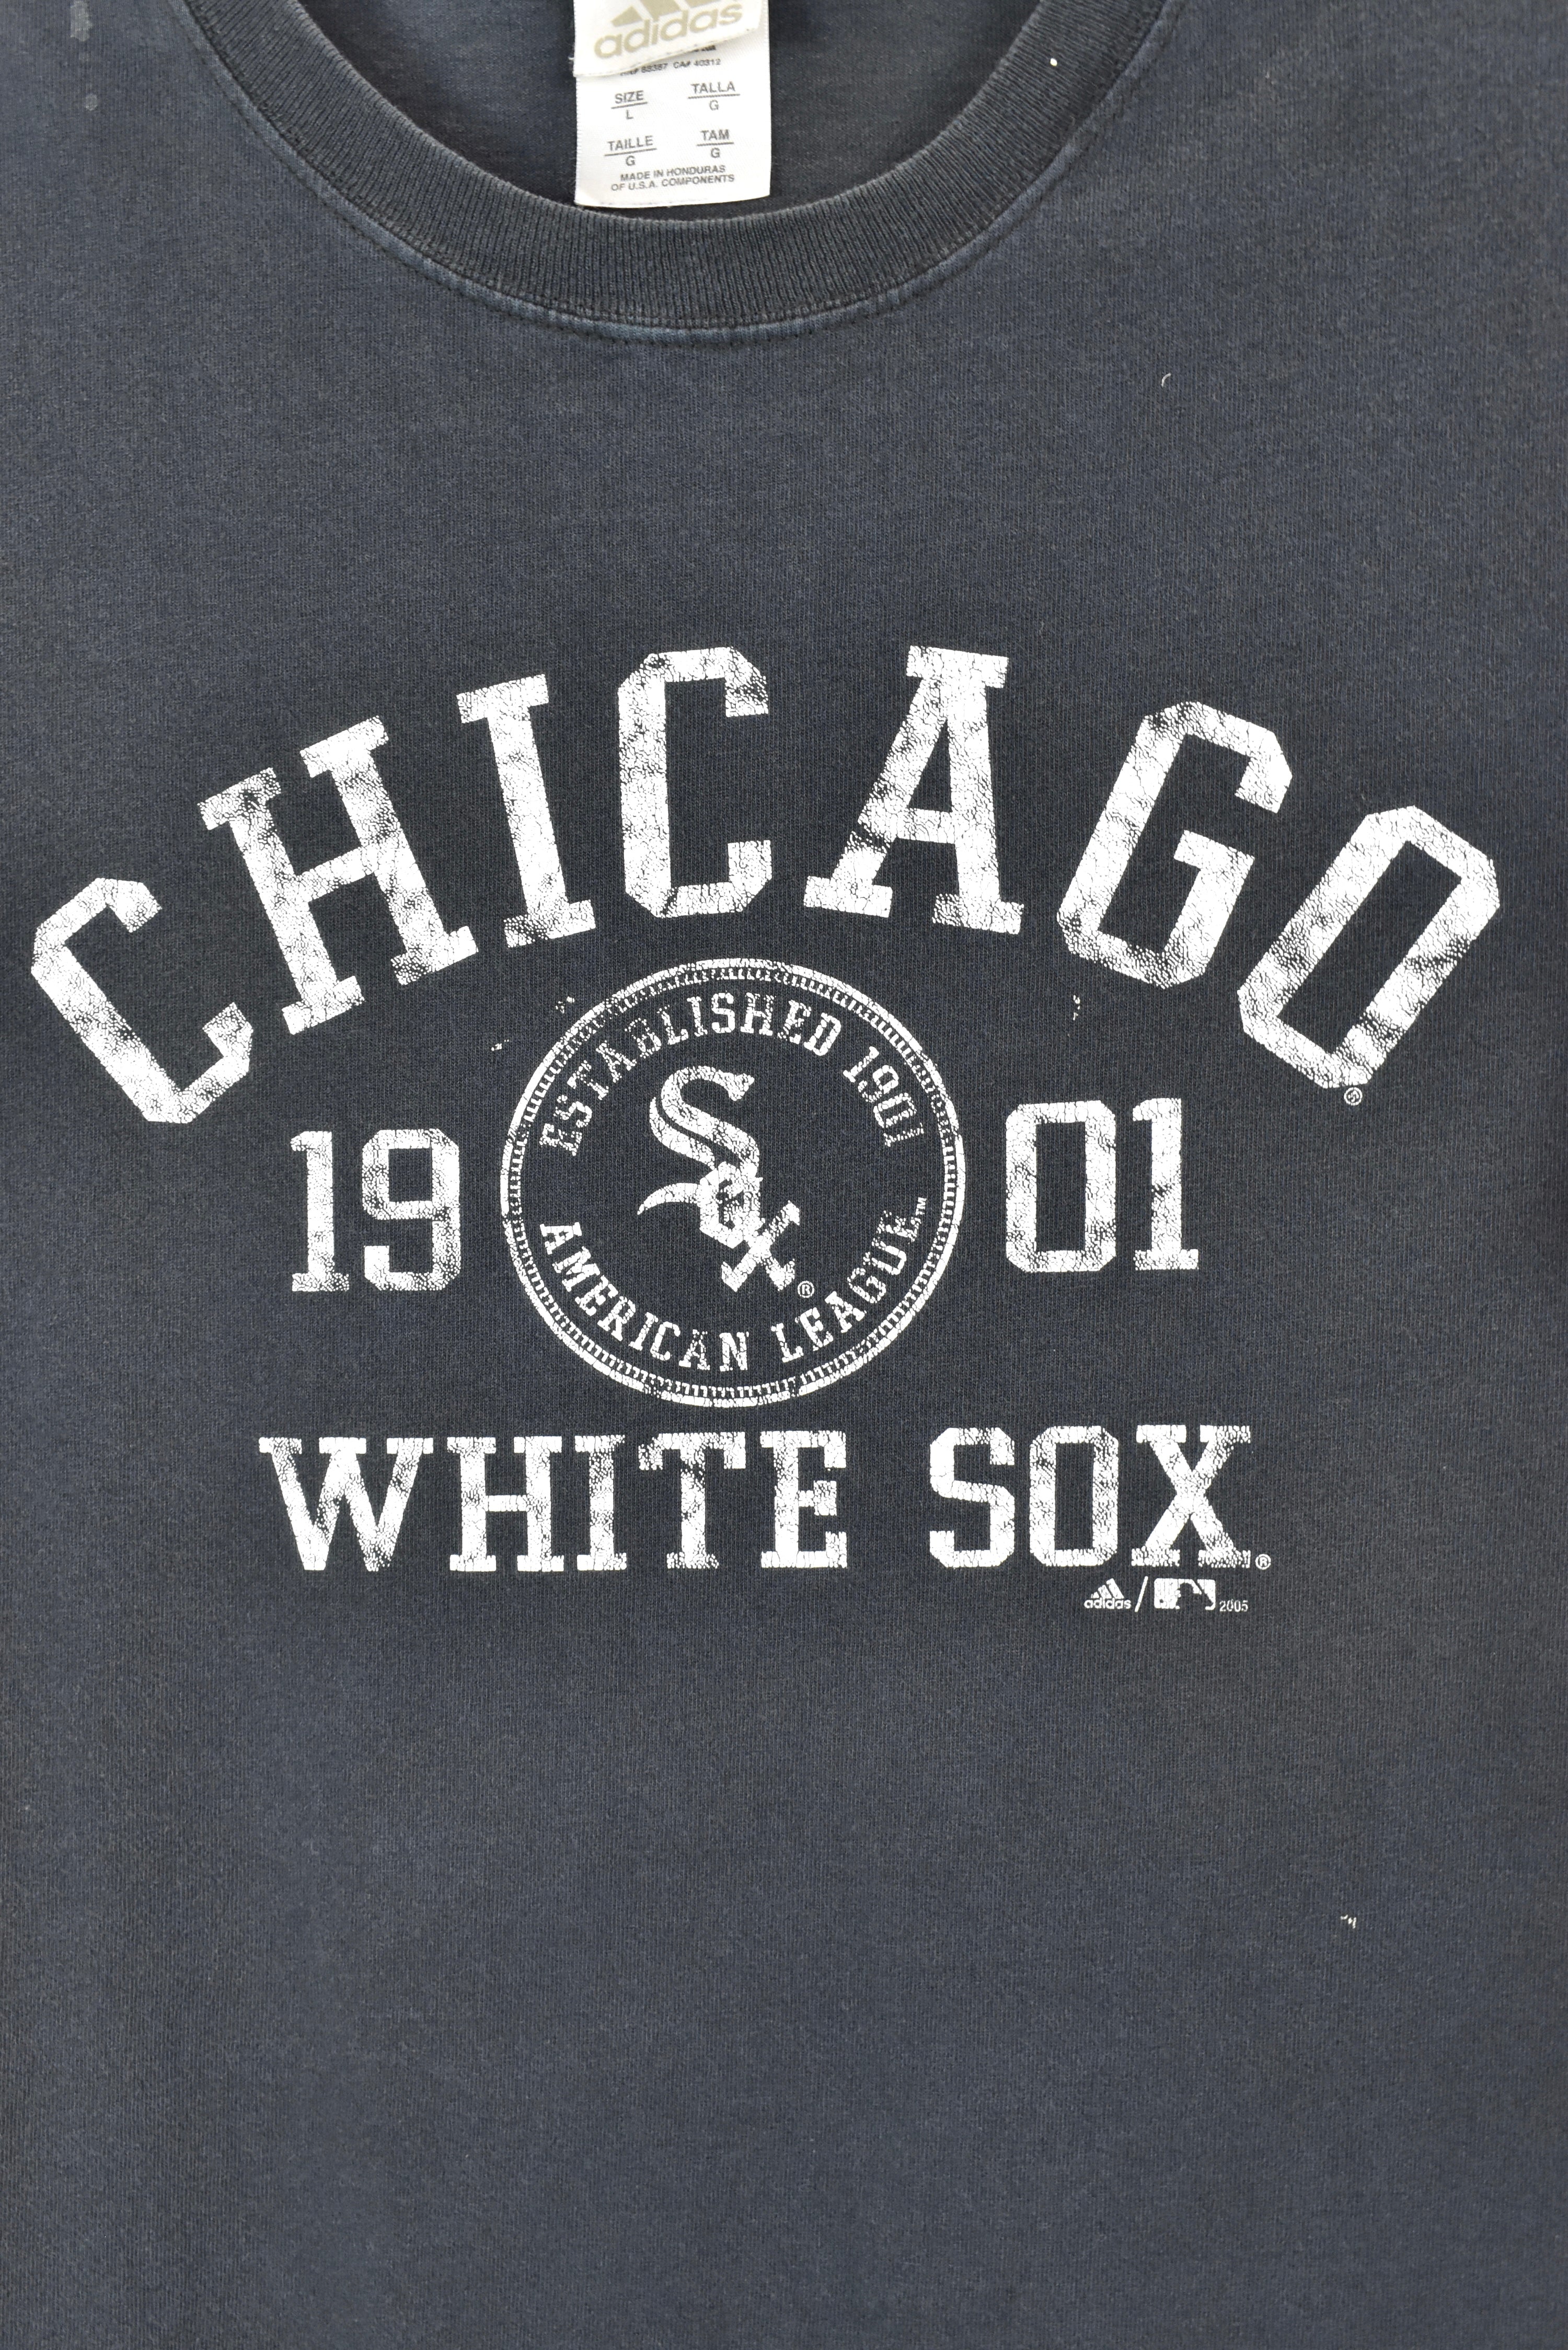 Lee, Shirts, Vintage White Sox Crew Neck